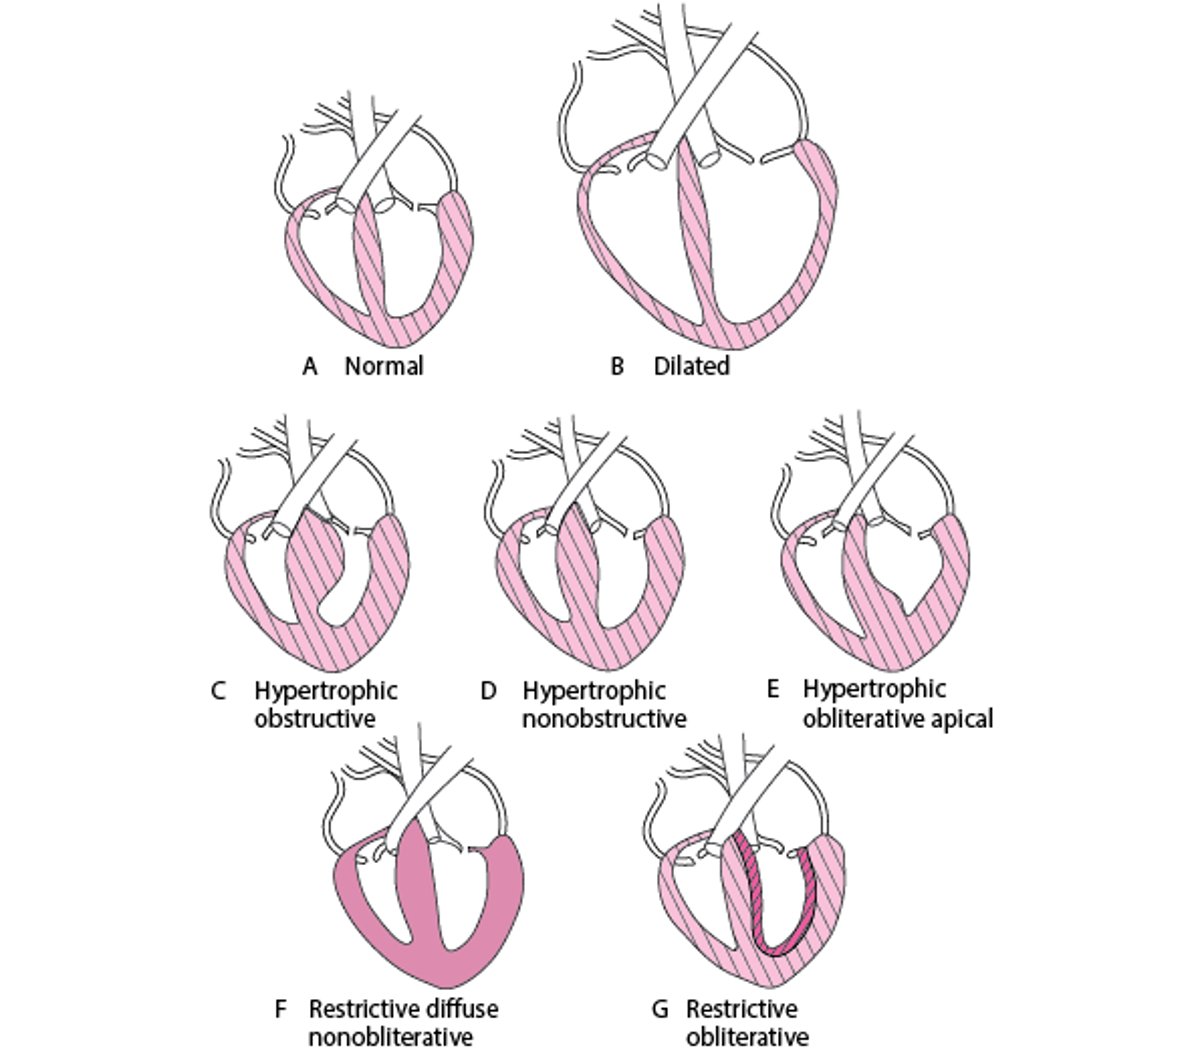 Forms of Cardiomyopathy